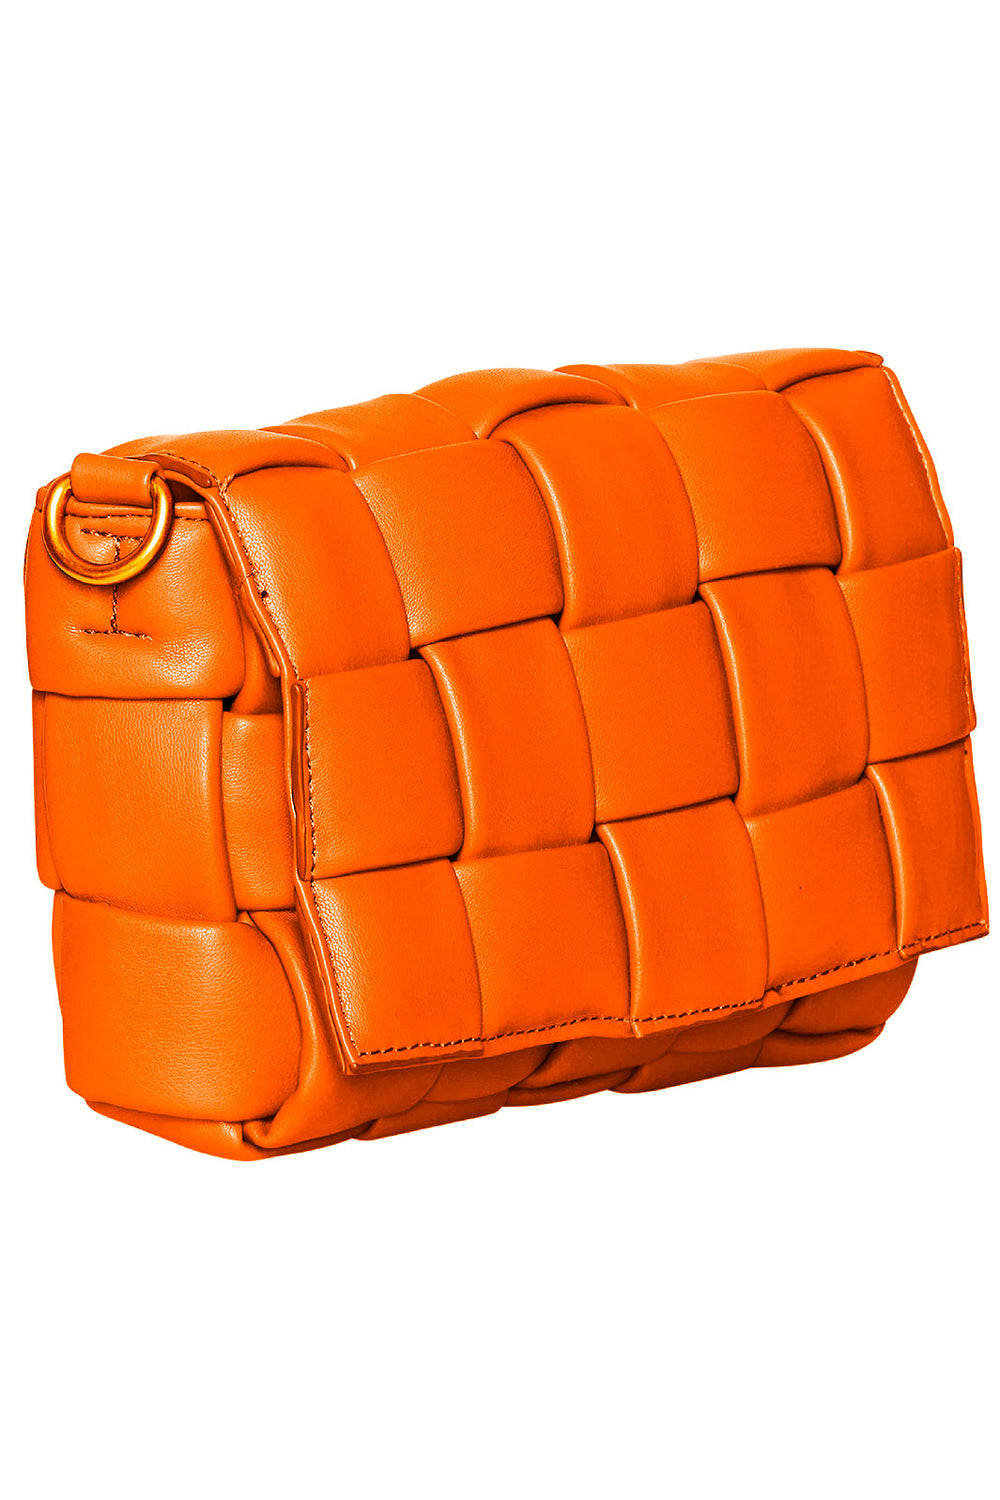 Noella - Brick Bag - Orange Tasker 